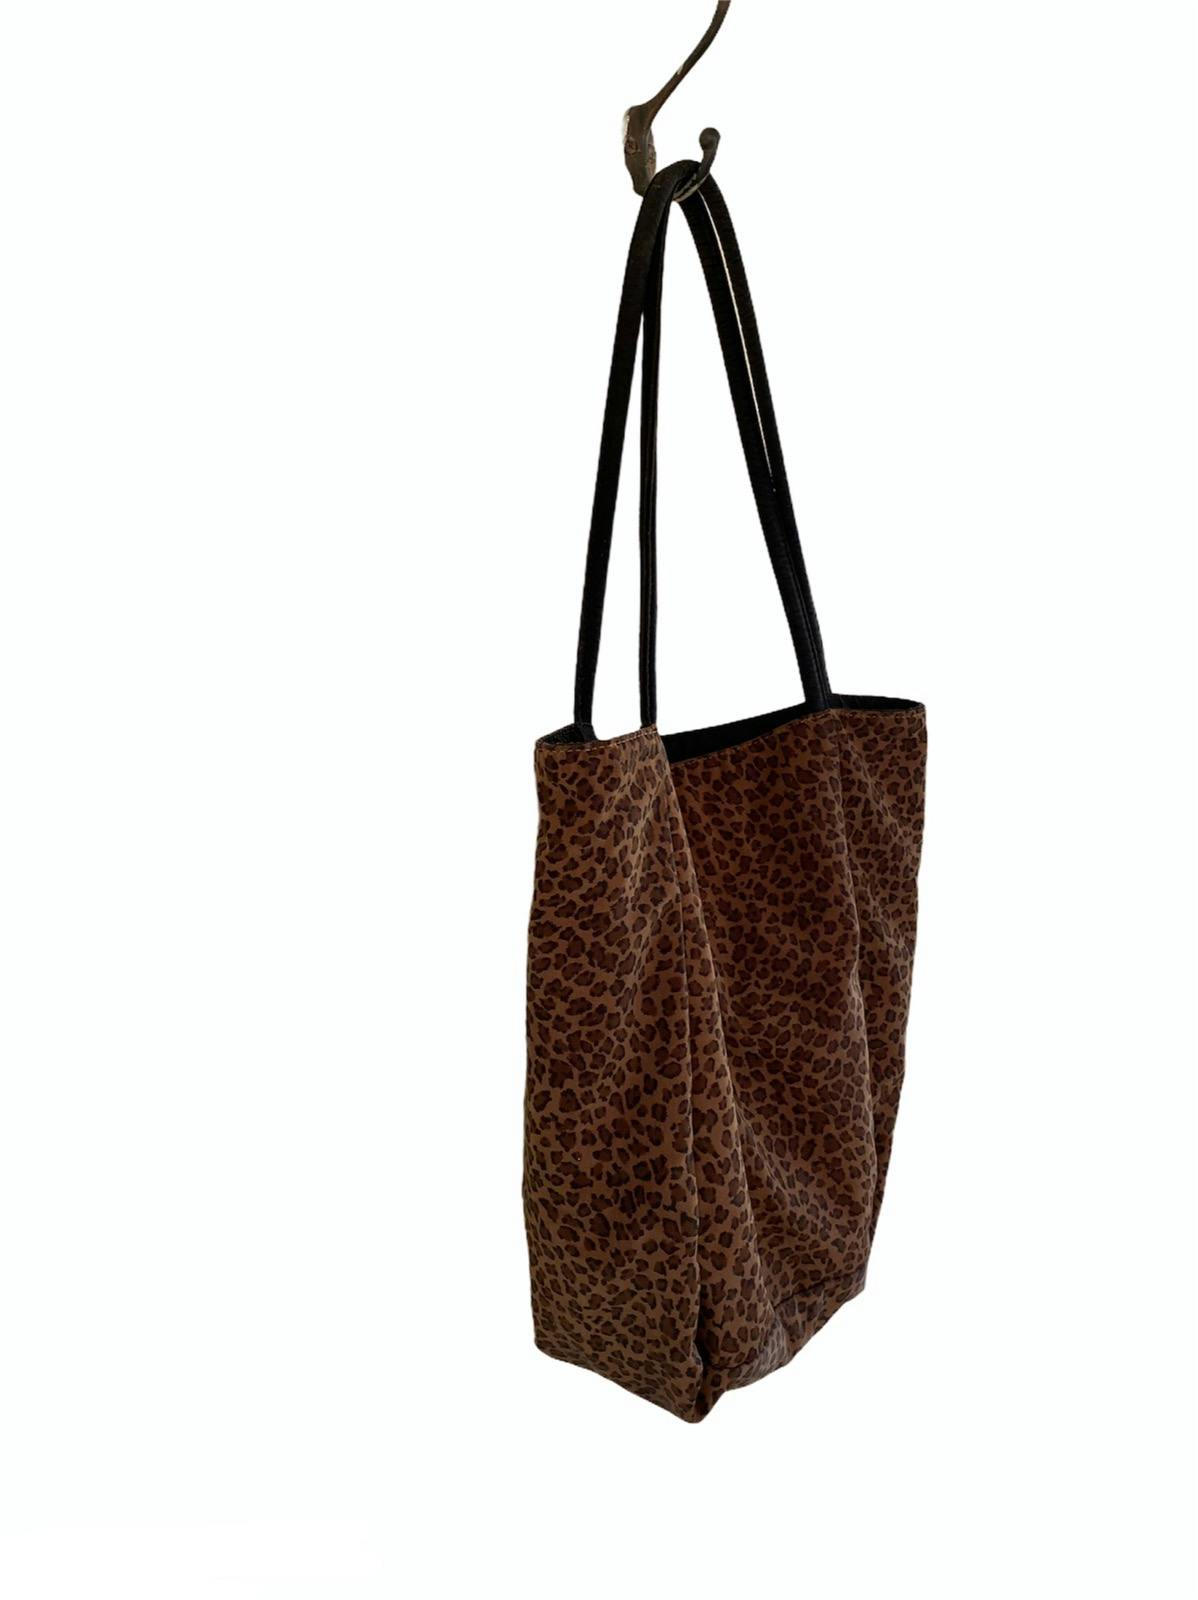 Bottega Veneta Leopard Tote Bag - 4